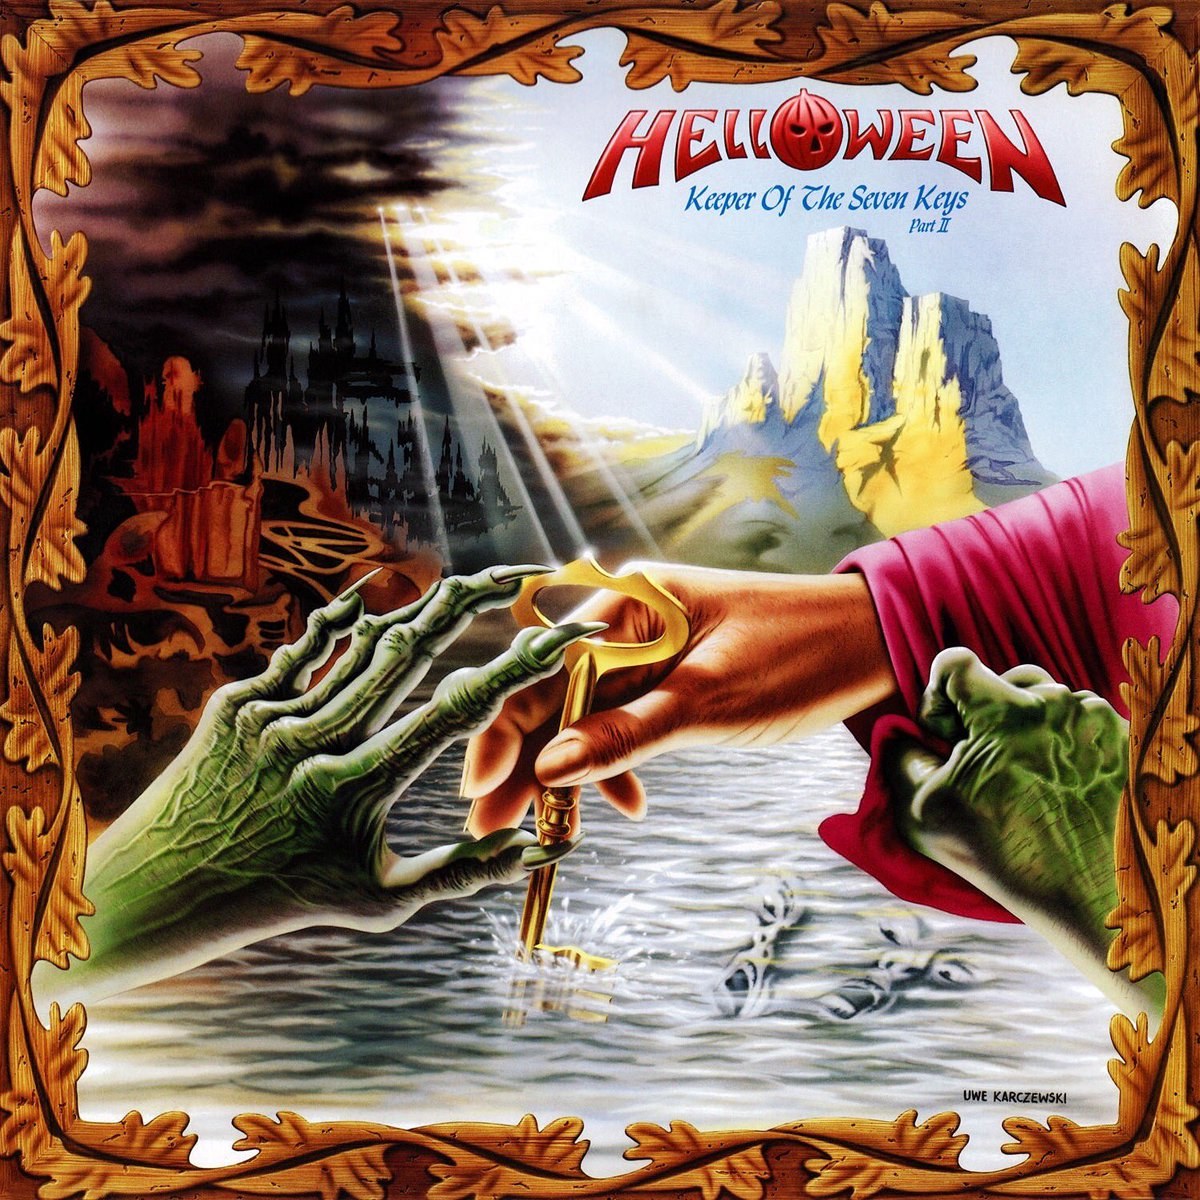 Couverture de "Keeper of the Seven Keys, Pt. 2" par Helloween